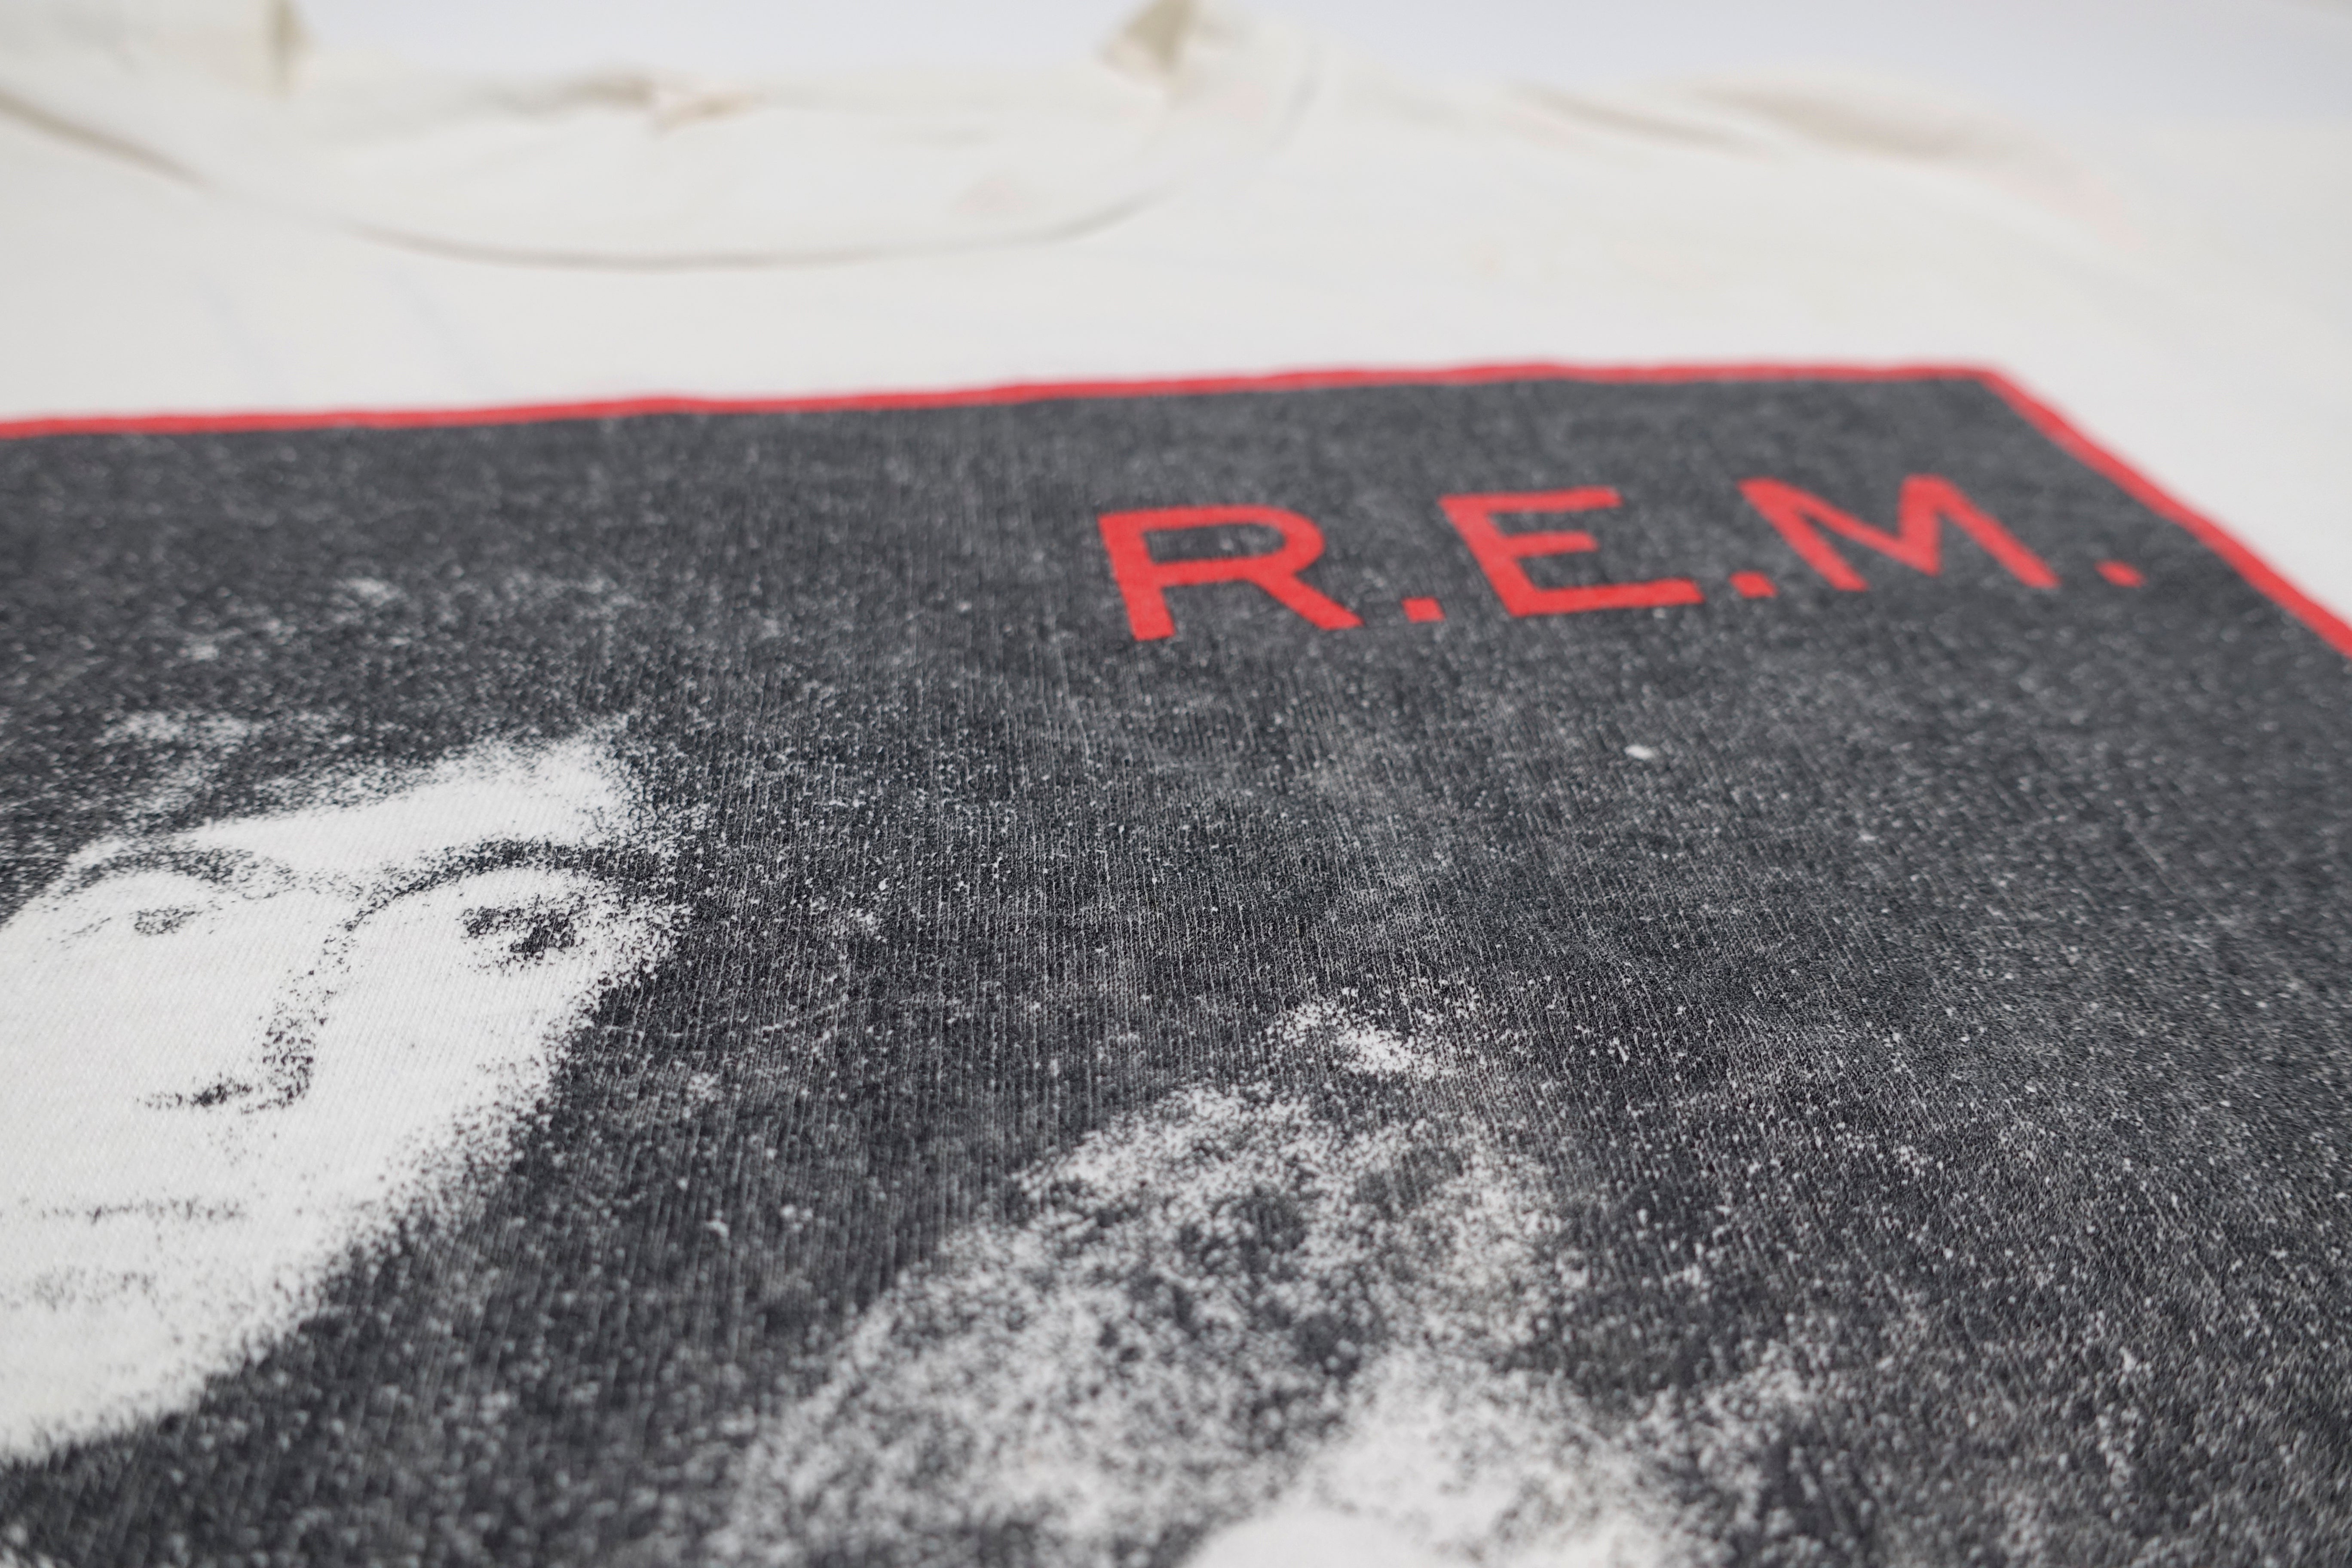 R.E.M. – Green World Tour 1989 Shirt Size XL